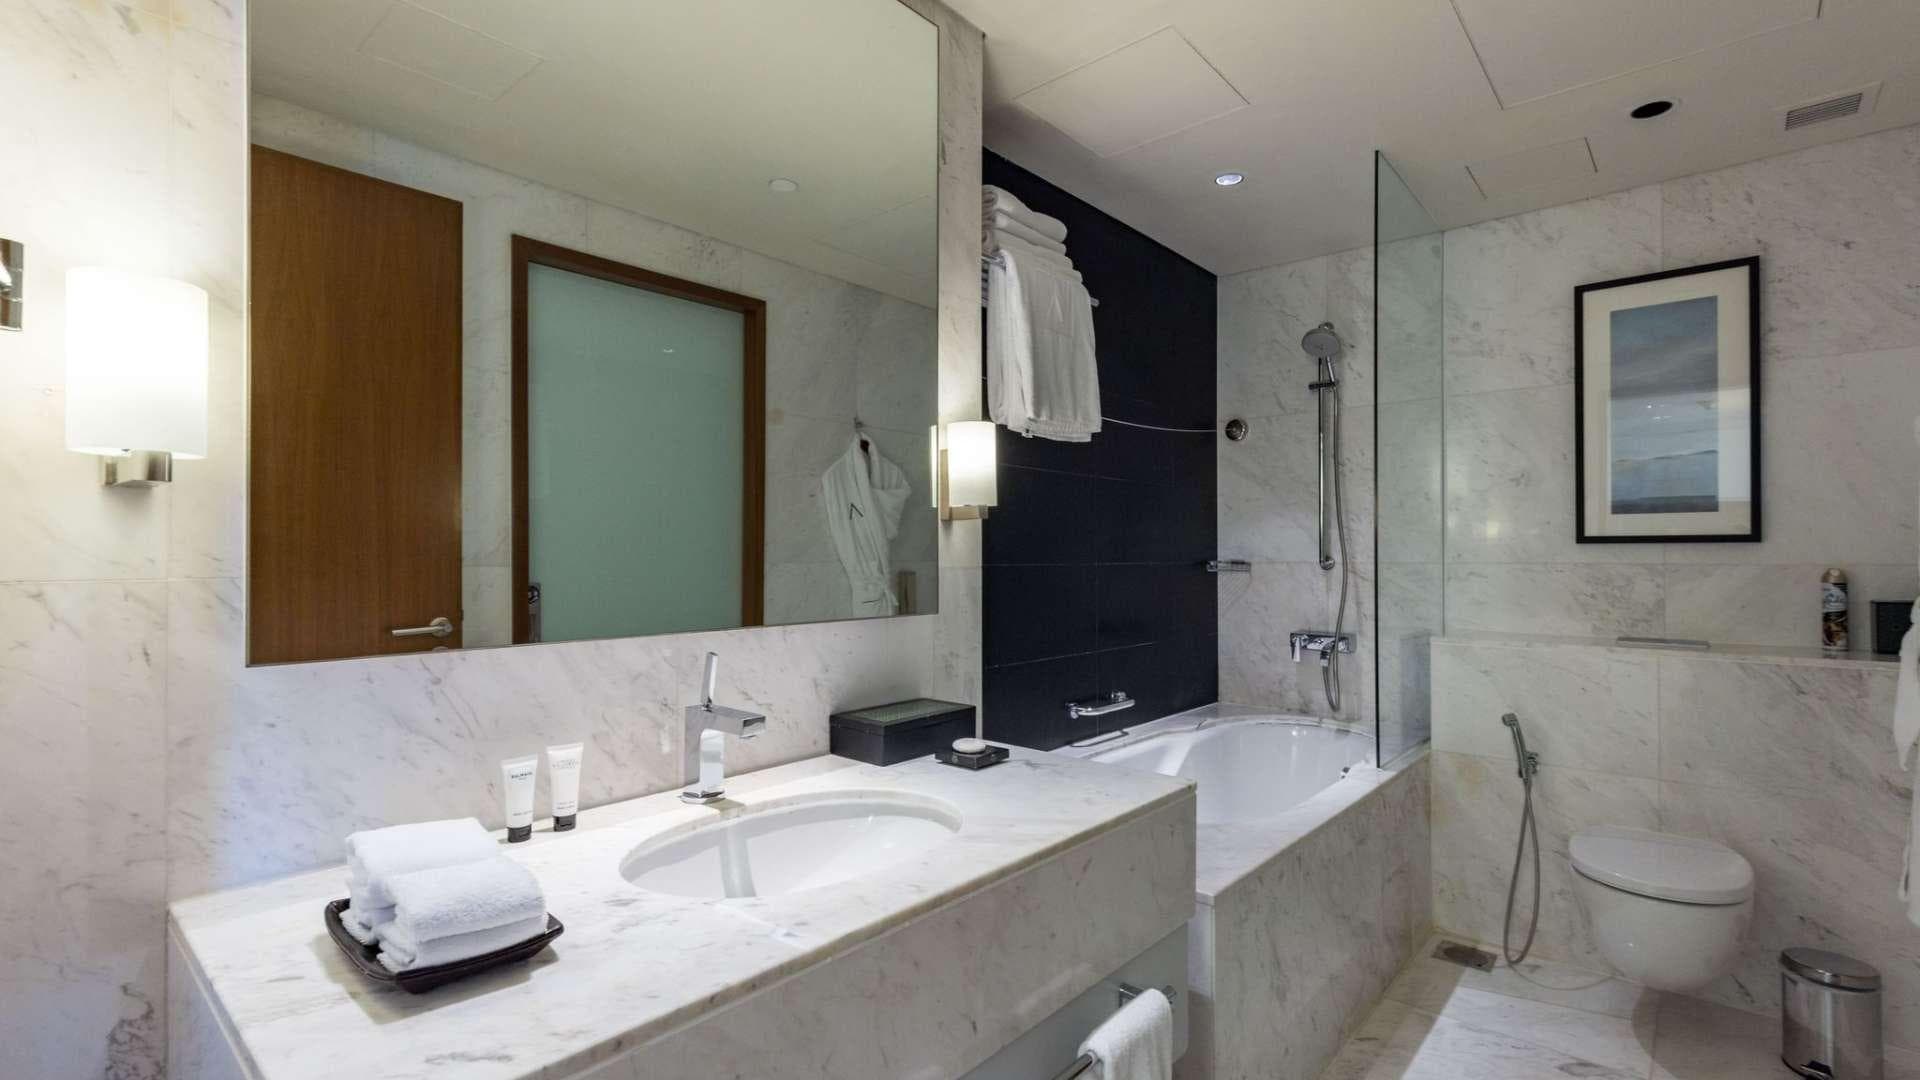 1 Bedroom Apartment For Rent The Address Dubai Mall Lp12545 190c62e91f3c8600.jpg